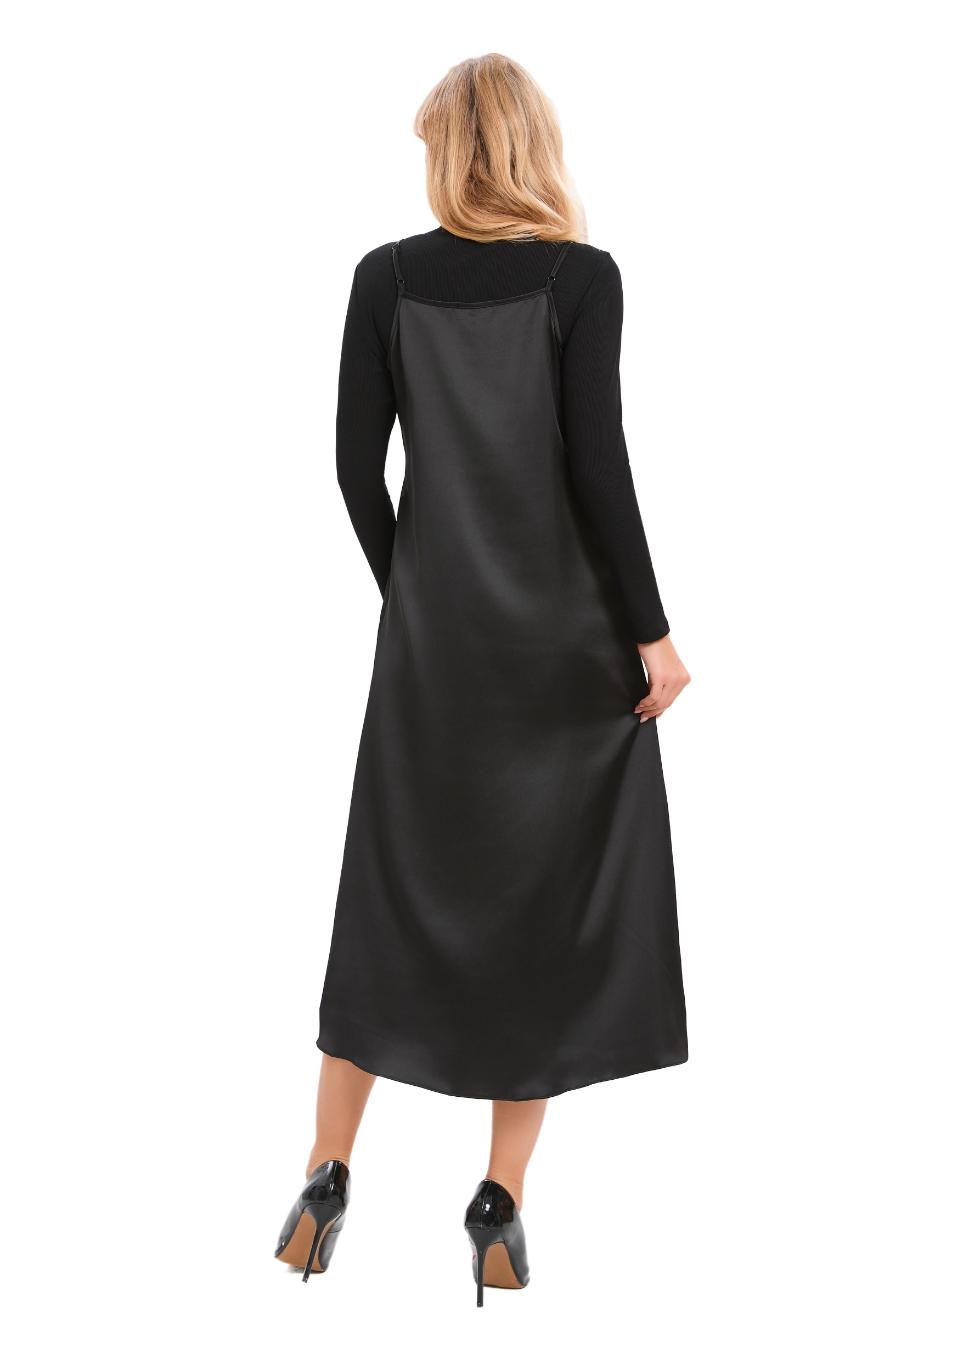 Black Chic Midi Slip Dress Outfit Set